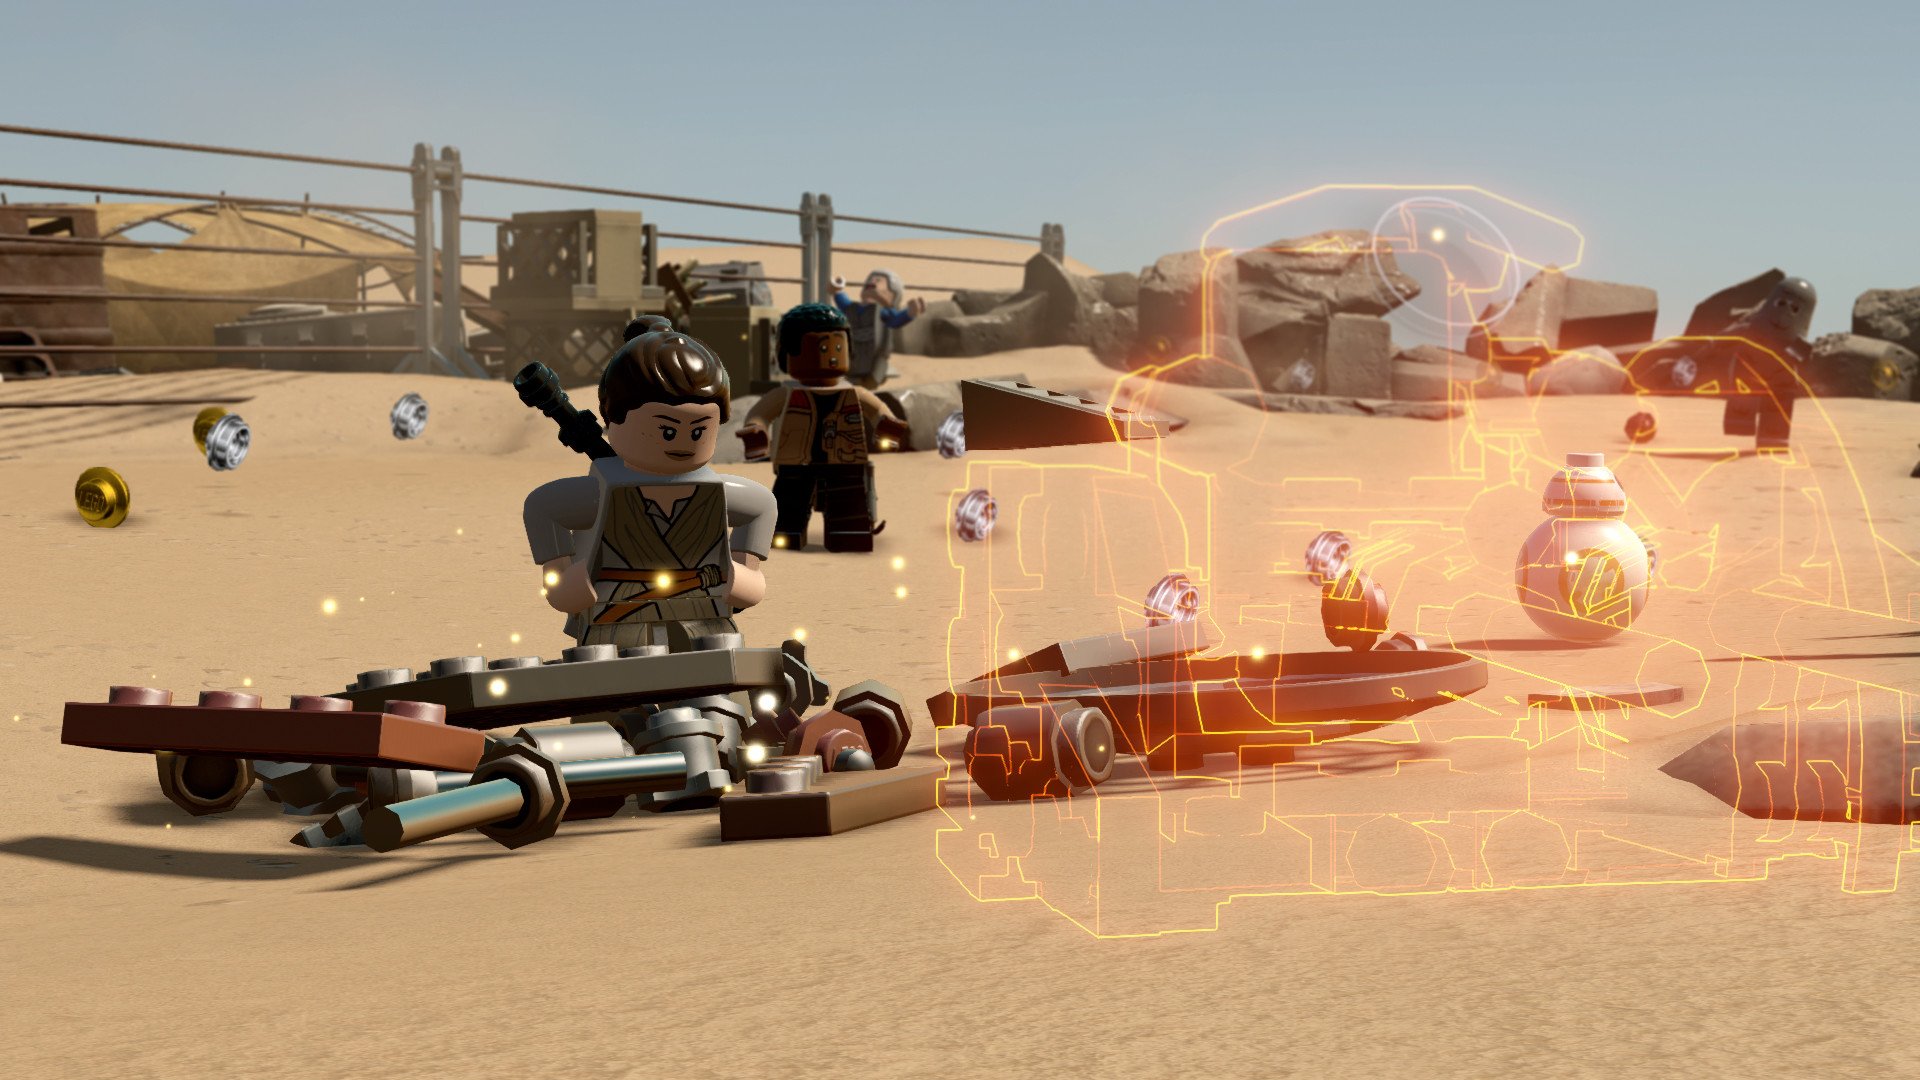 LEGO® Star Wars™: The Skywalker Saga Requisitos Mínimos e